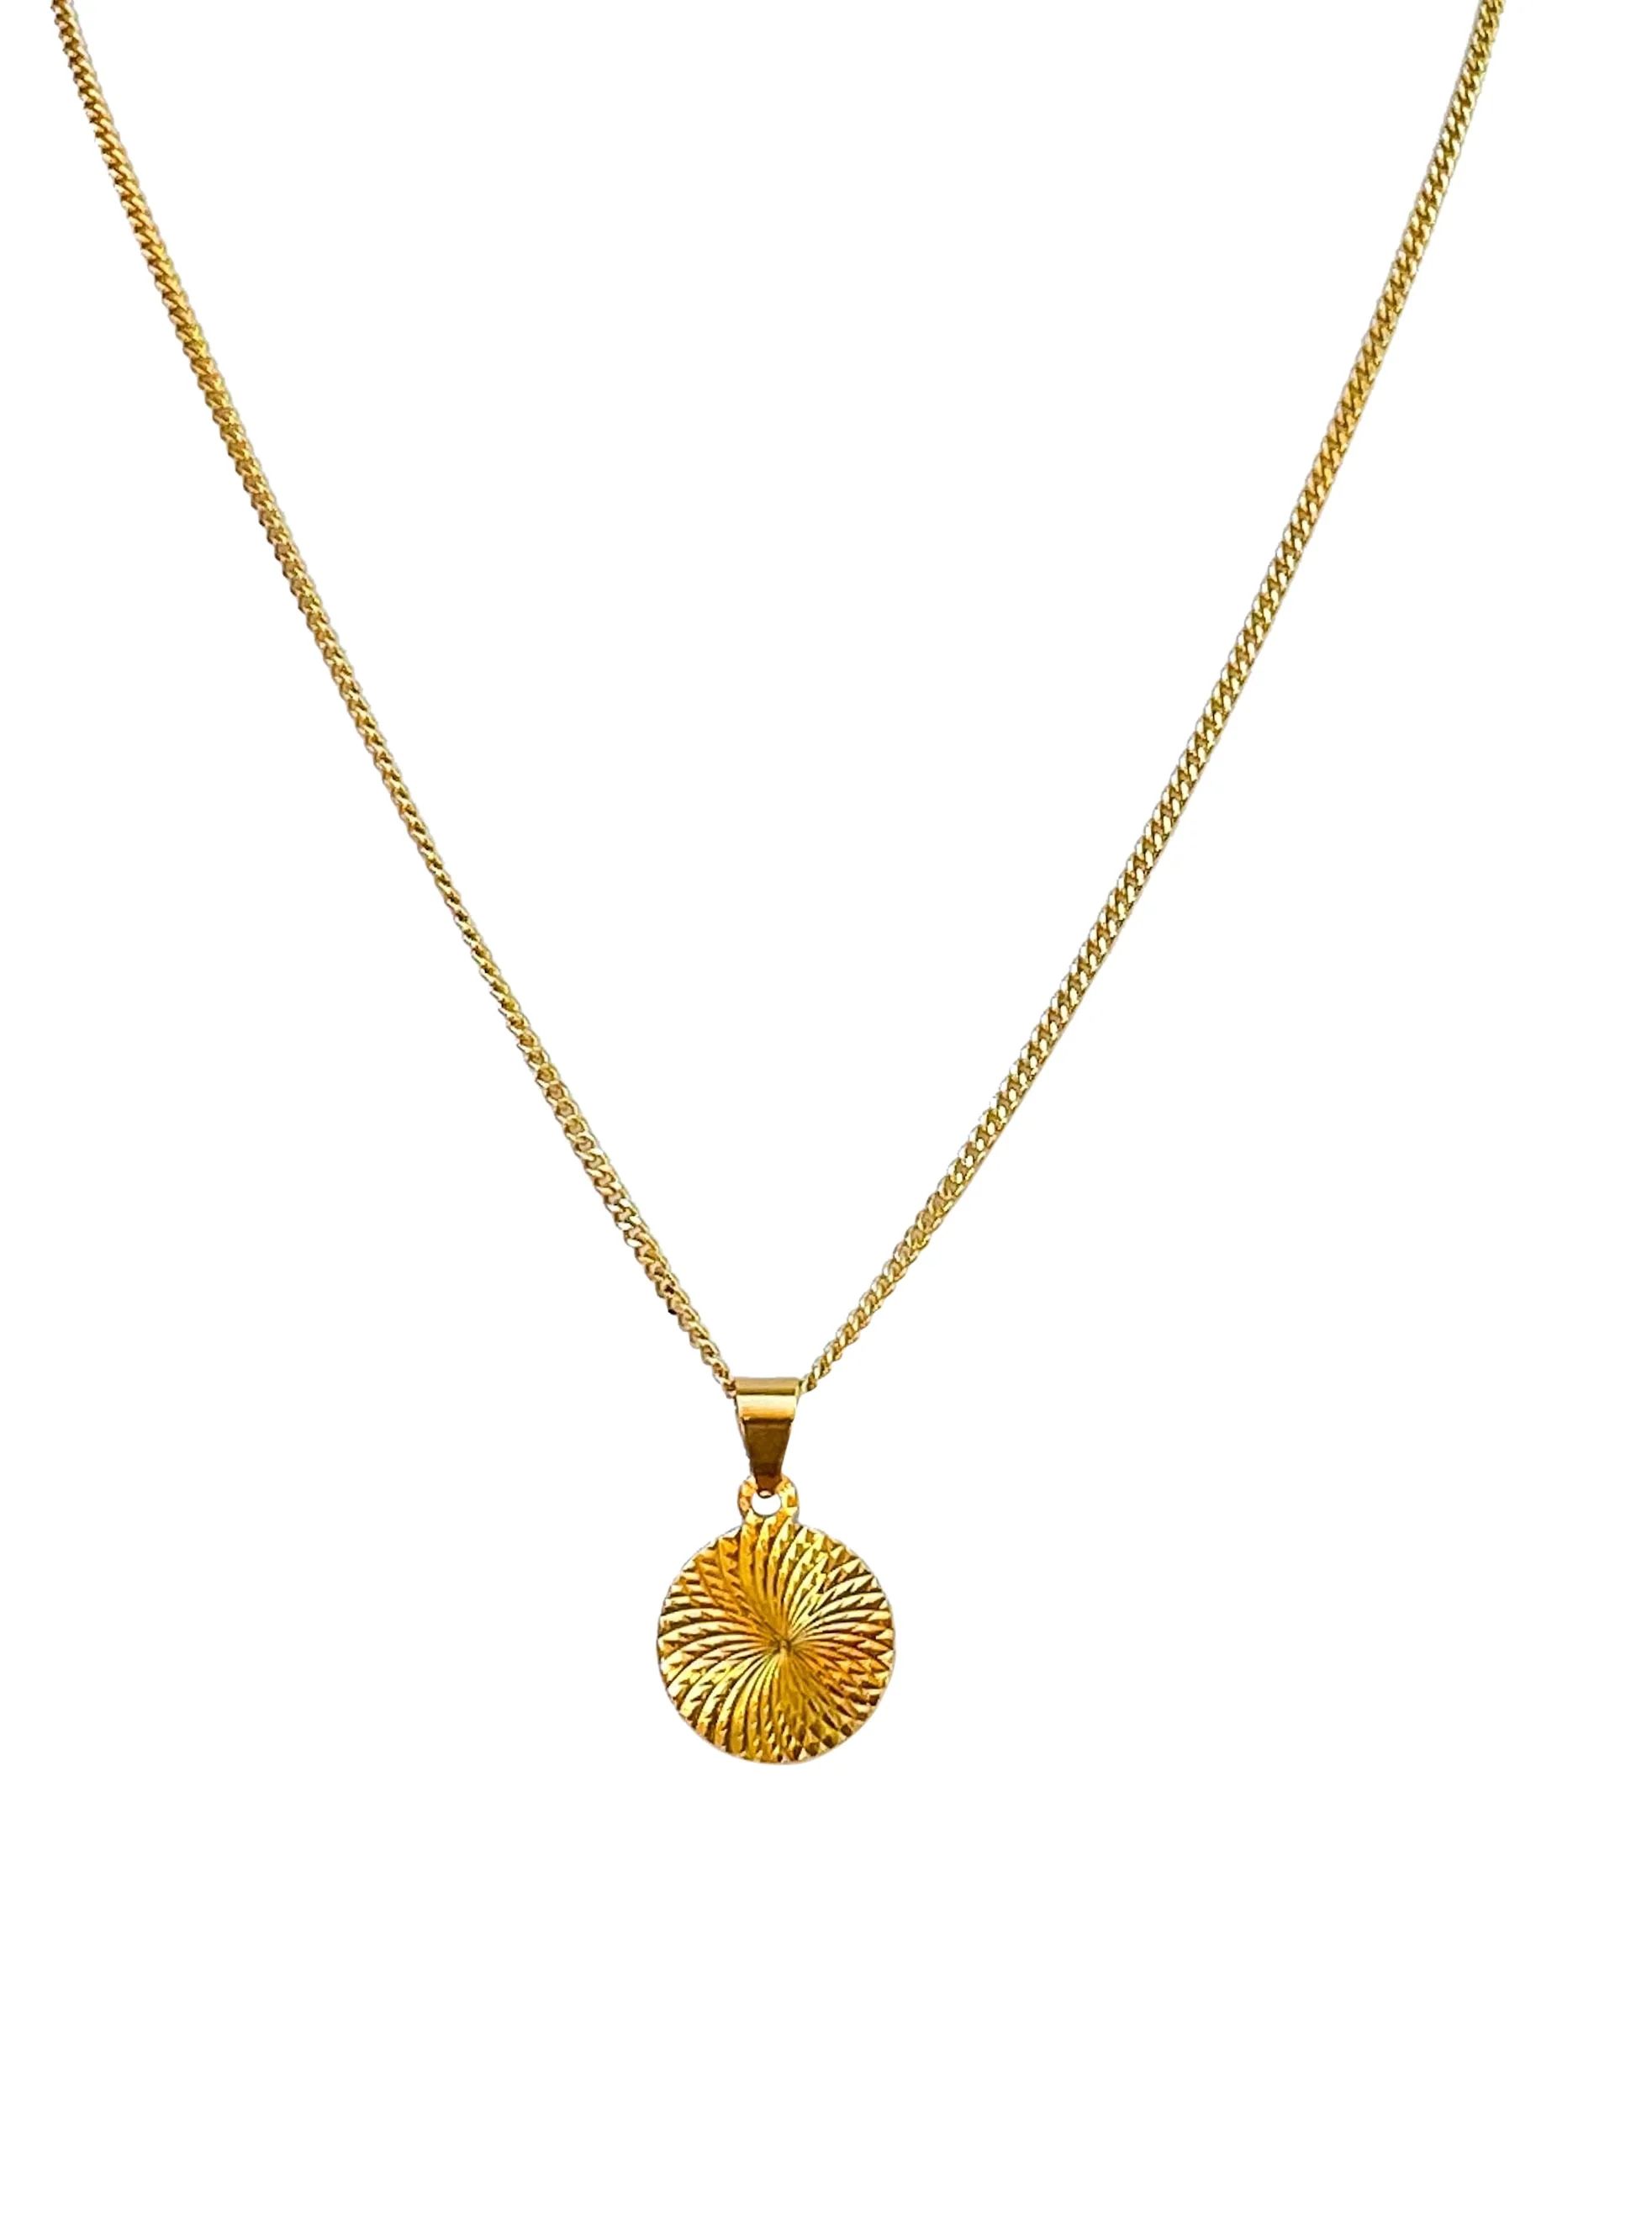 Sunburst Coin Necklace | Meghan Bo Designs